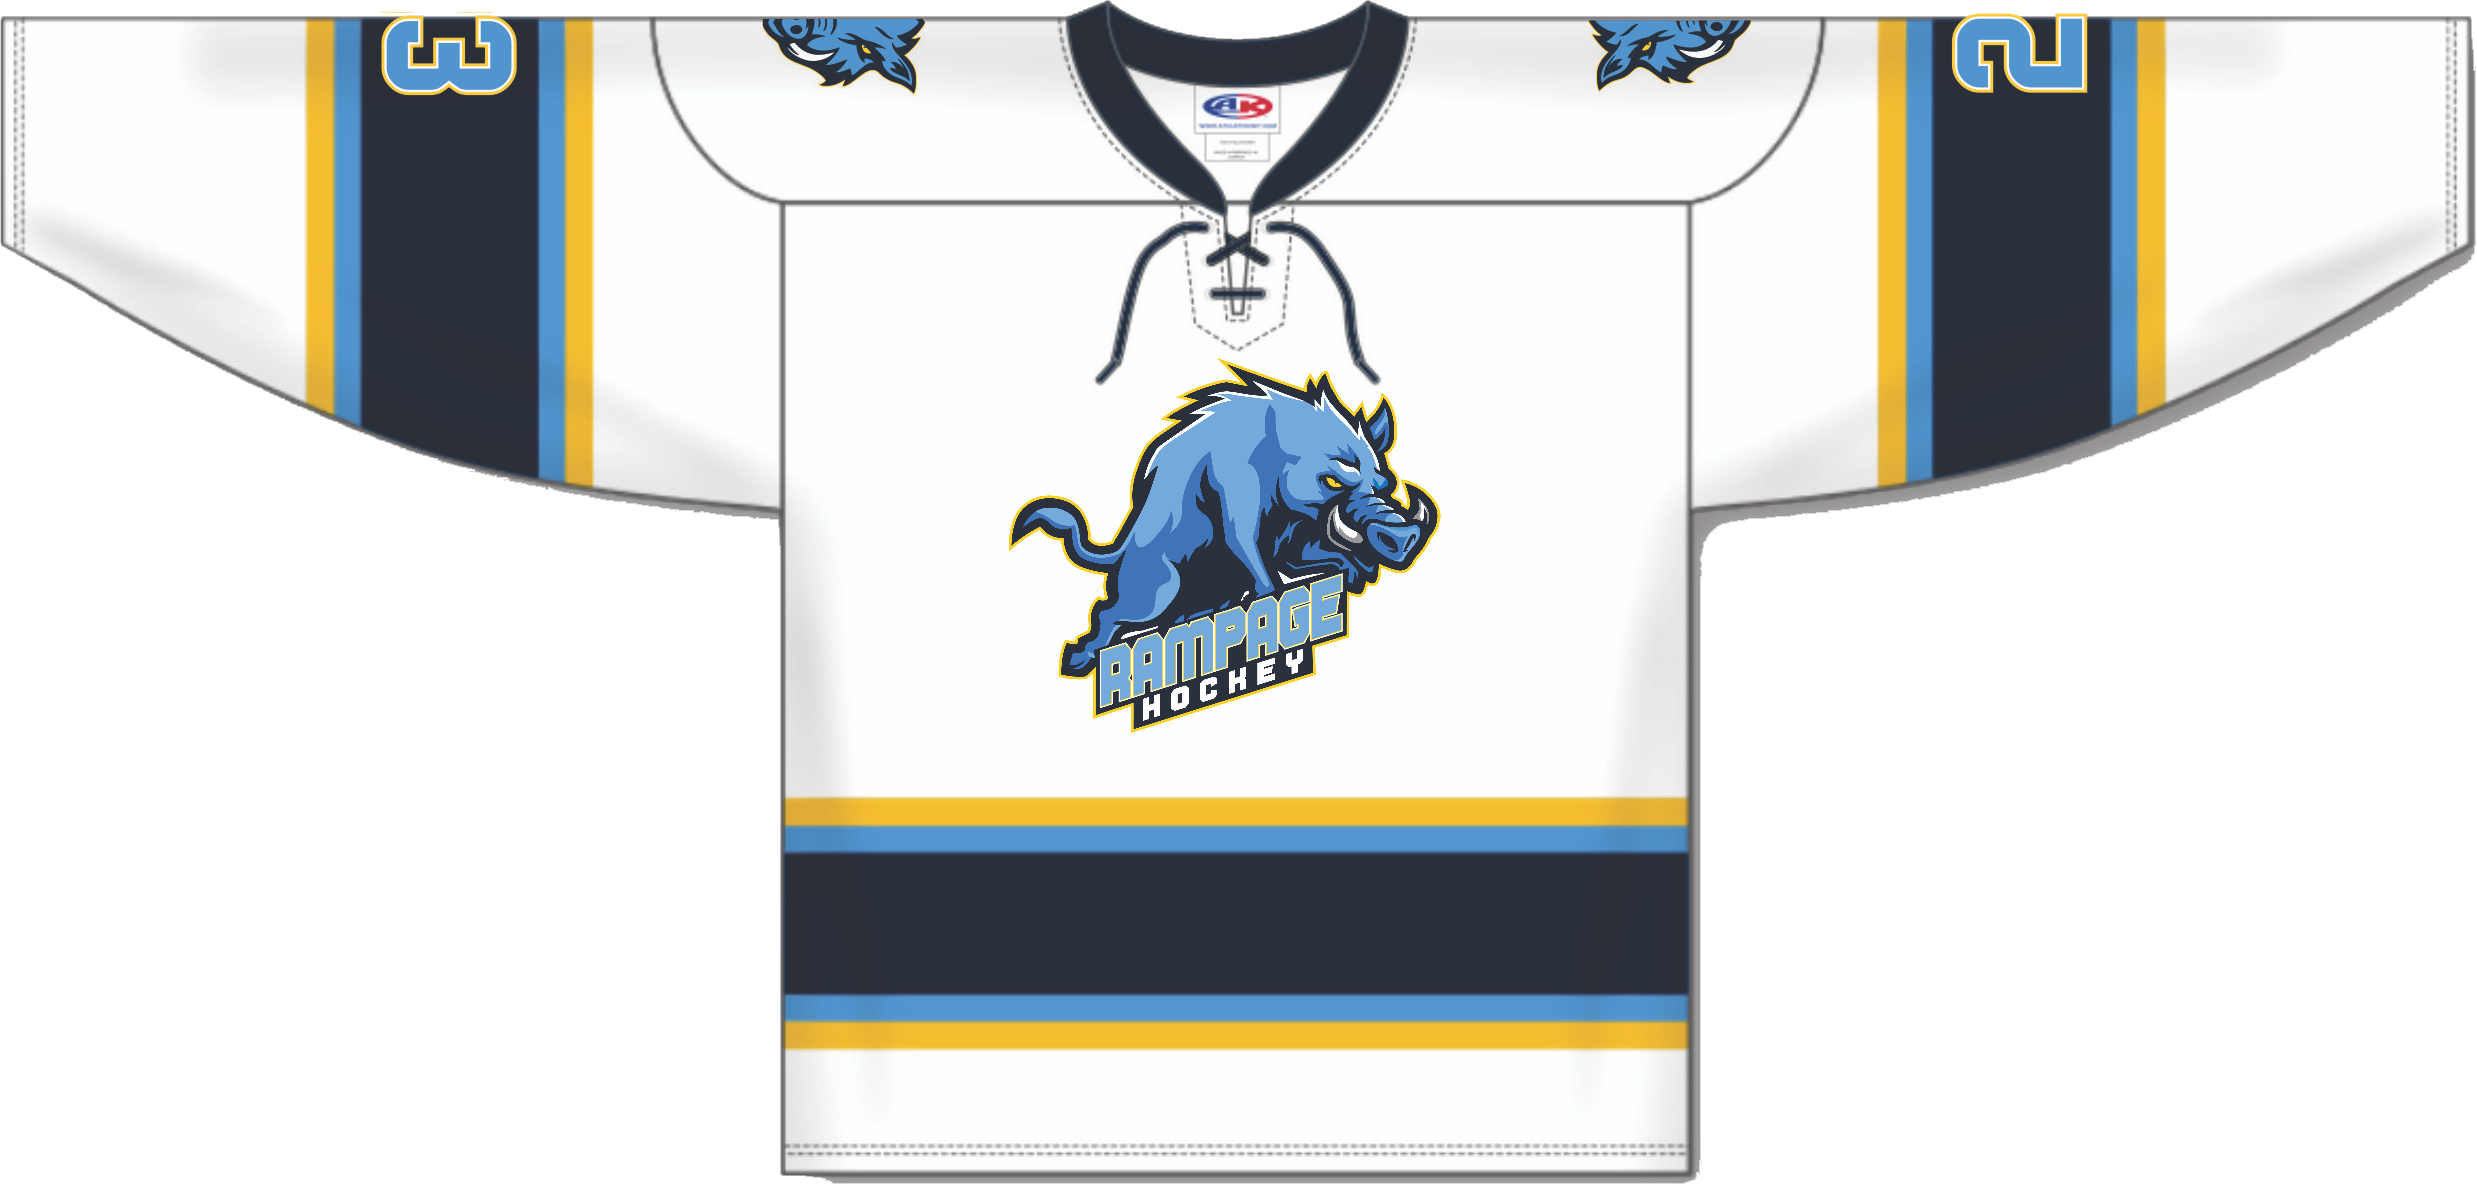 Rampage Blue Hockey Jersey